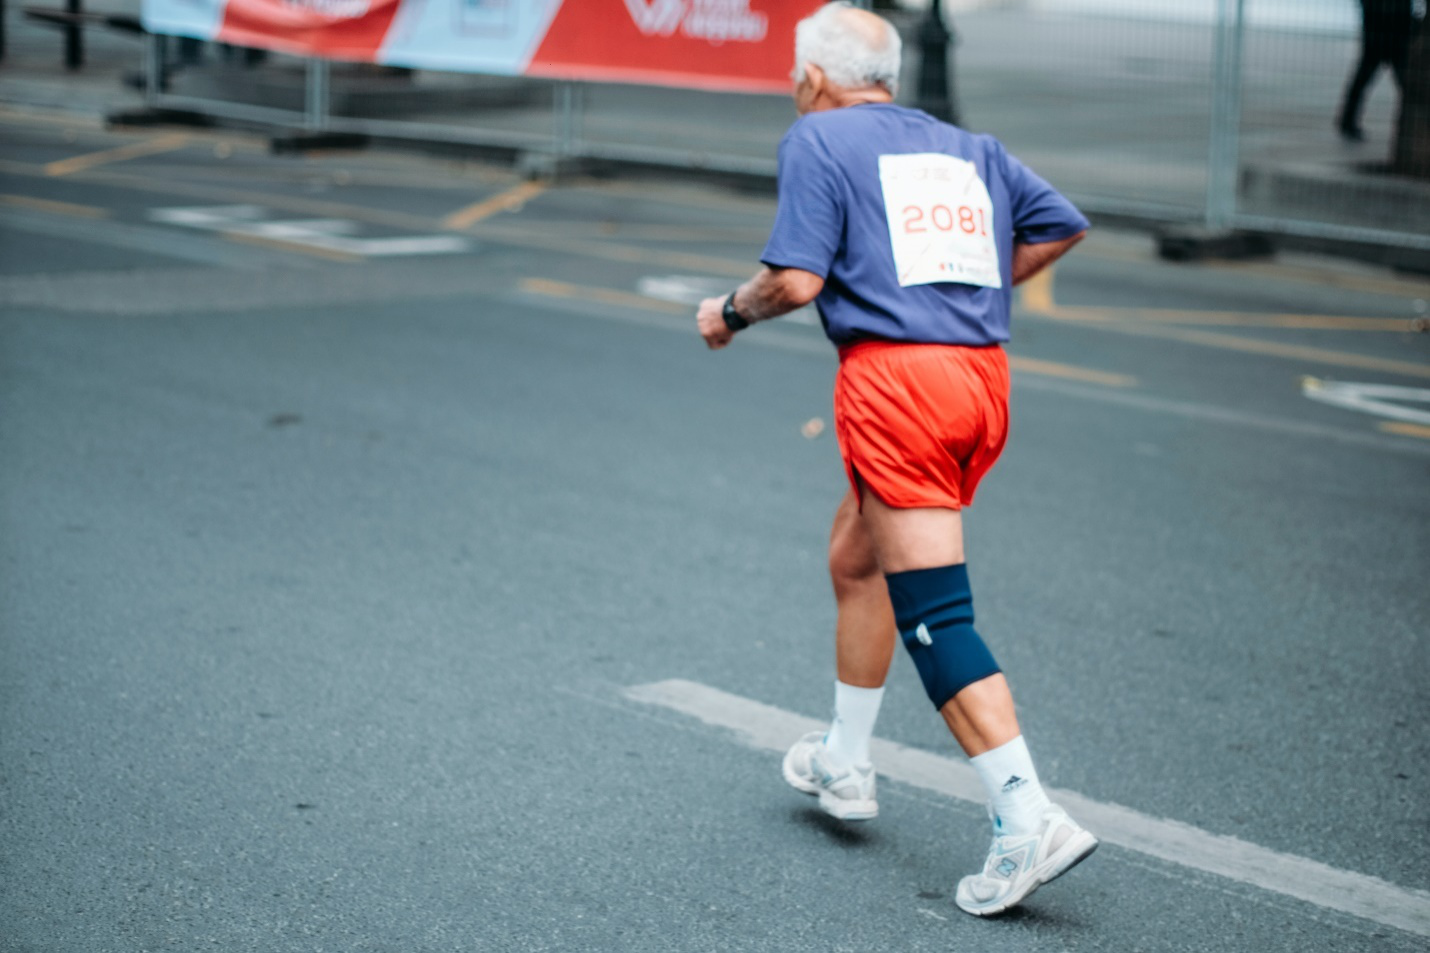 A person finishing a marathon